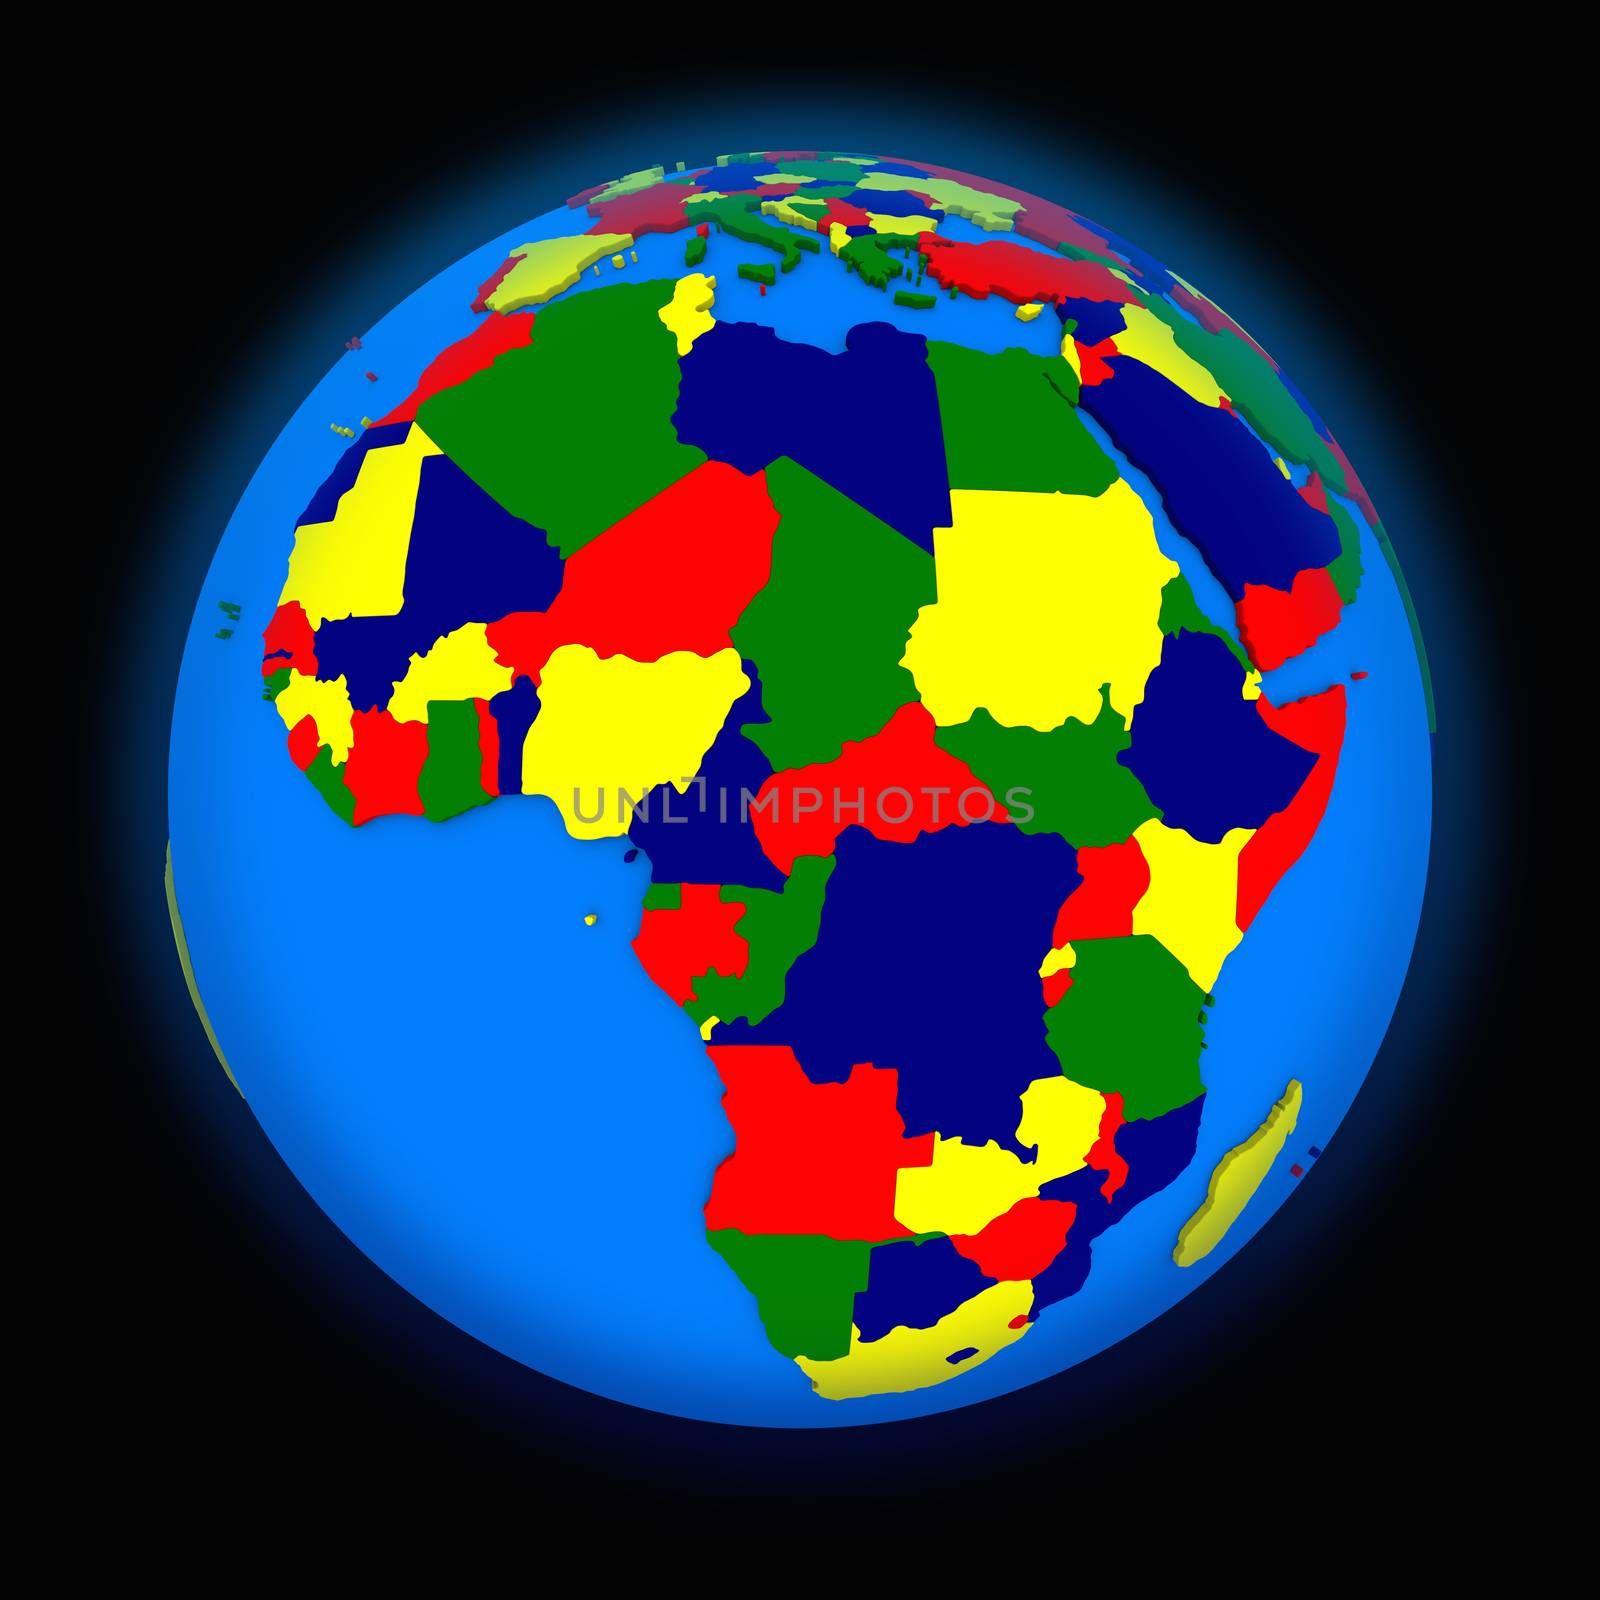 Africa on political globe on black background